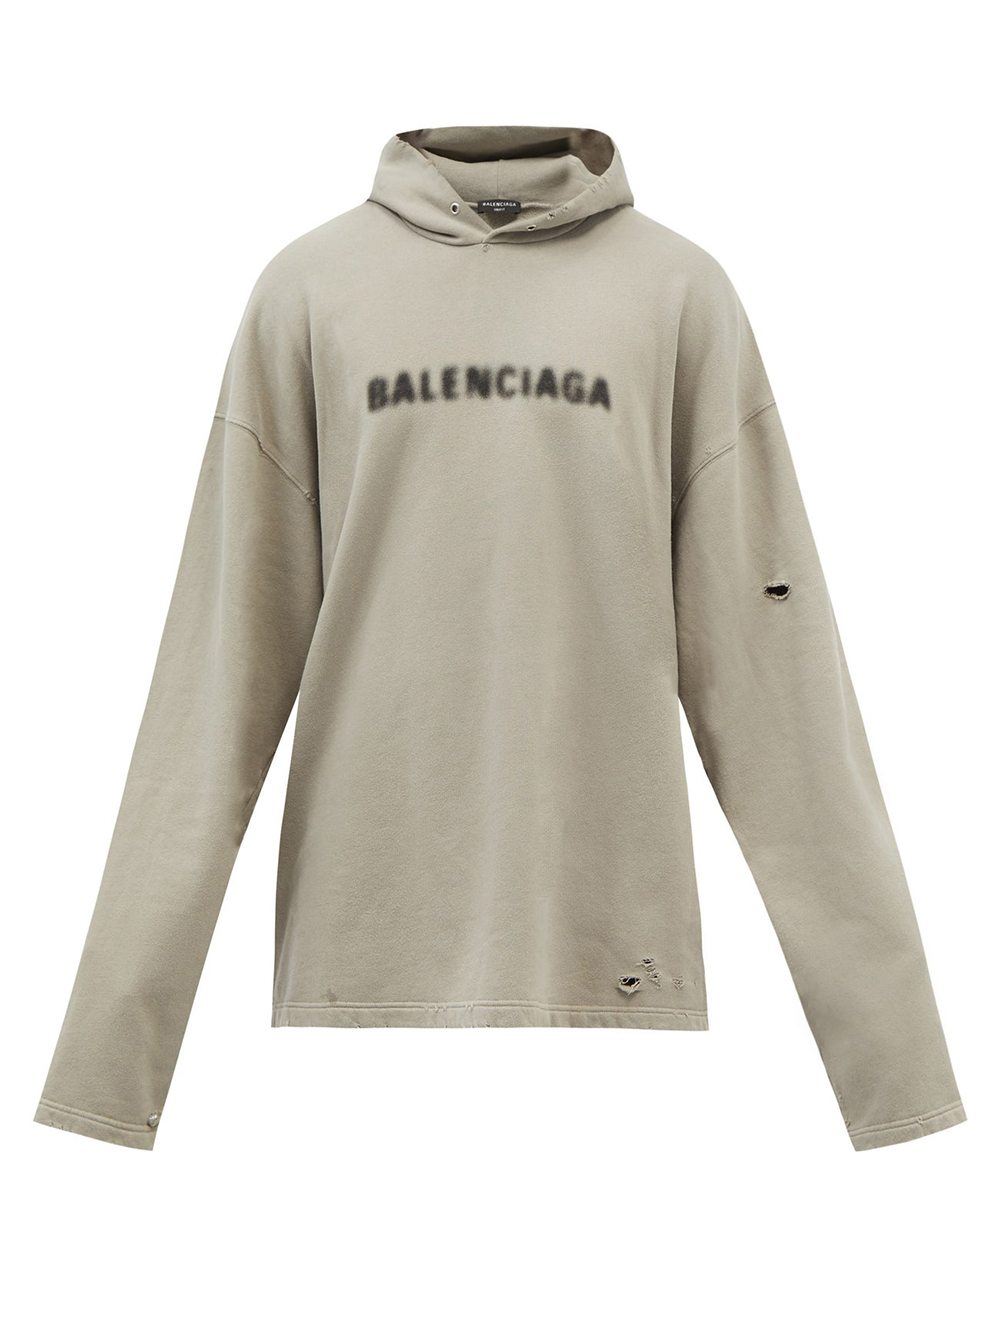 Balenciaga Gaffer Hoodie Zip Up Grey Mud Distressed Size M  eBay